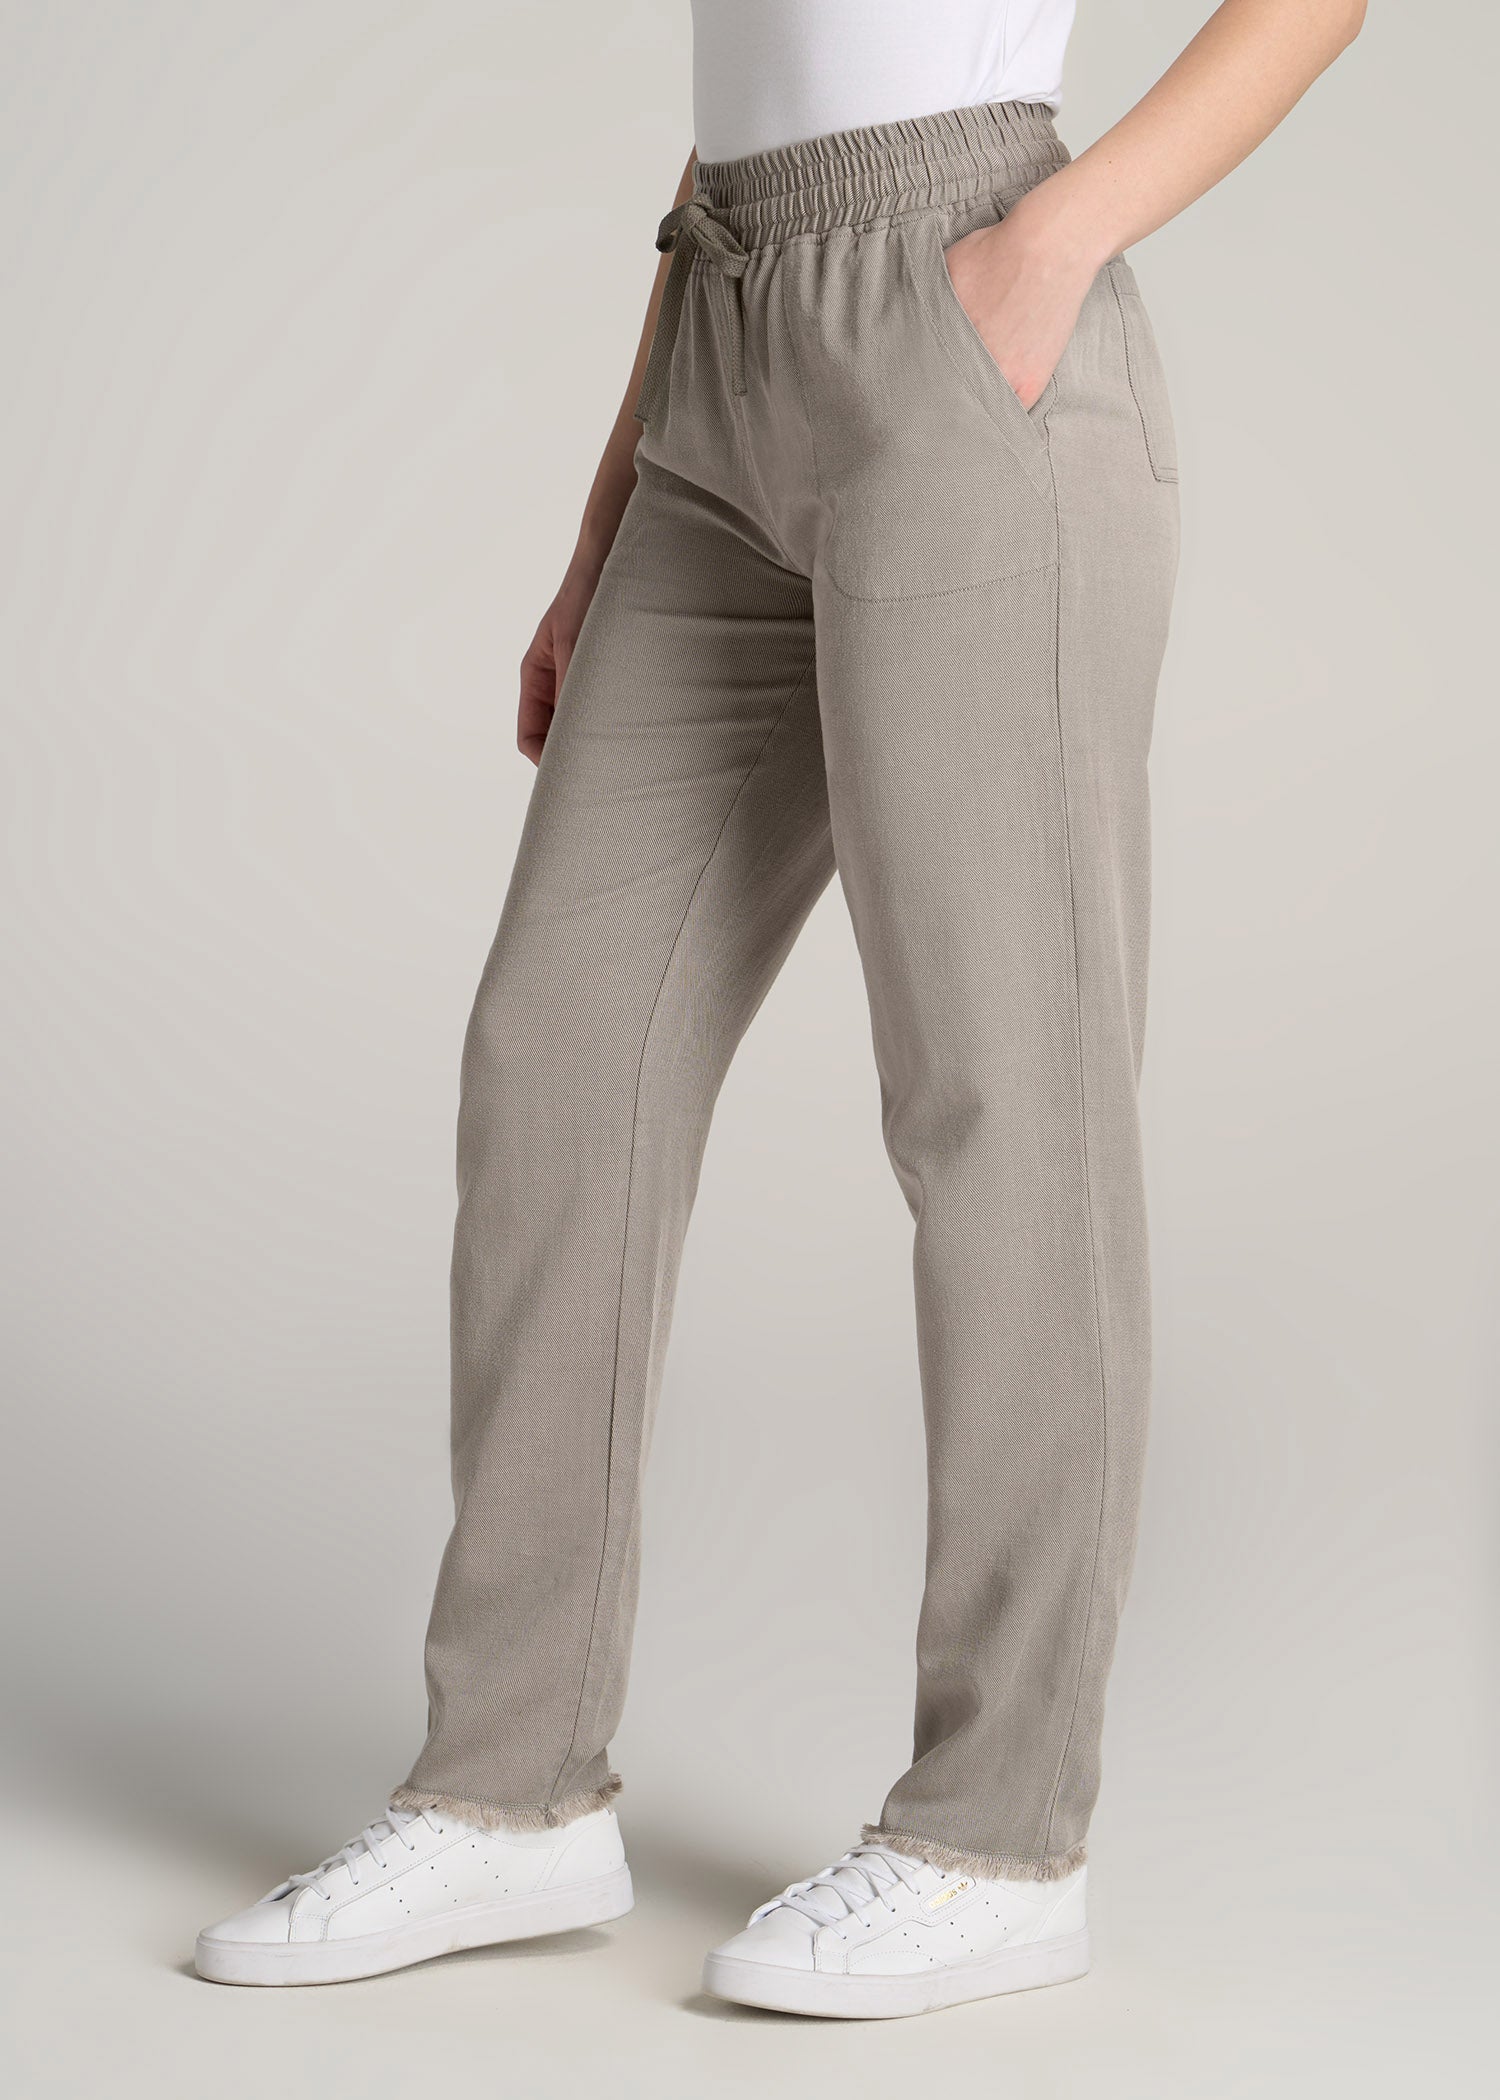 Buy Grey Trousers & Pants for Women by BLISSCLUB Online | Ajio.com